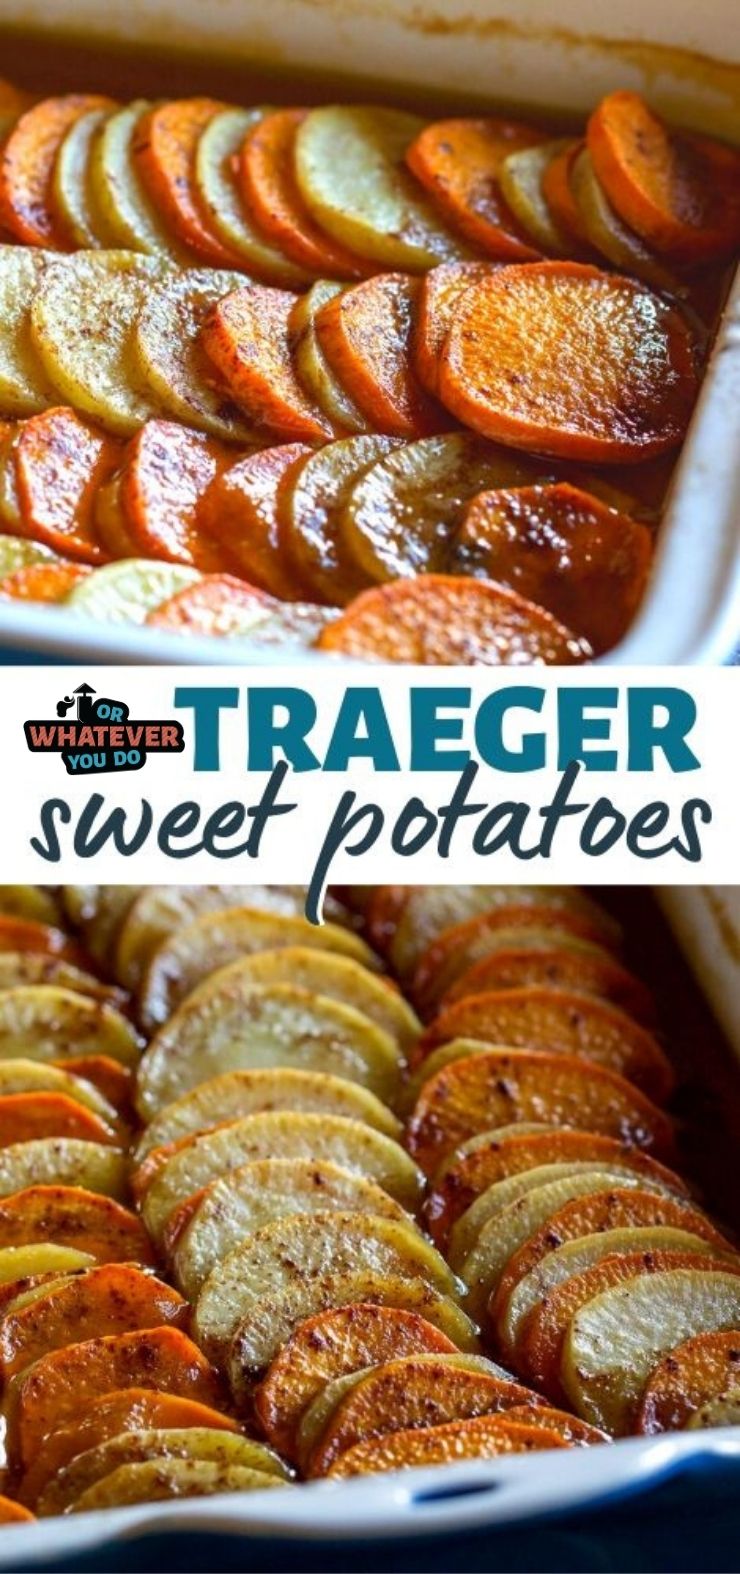 Traeger Sweet Potatoes